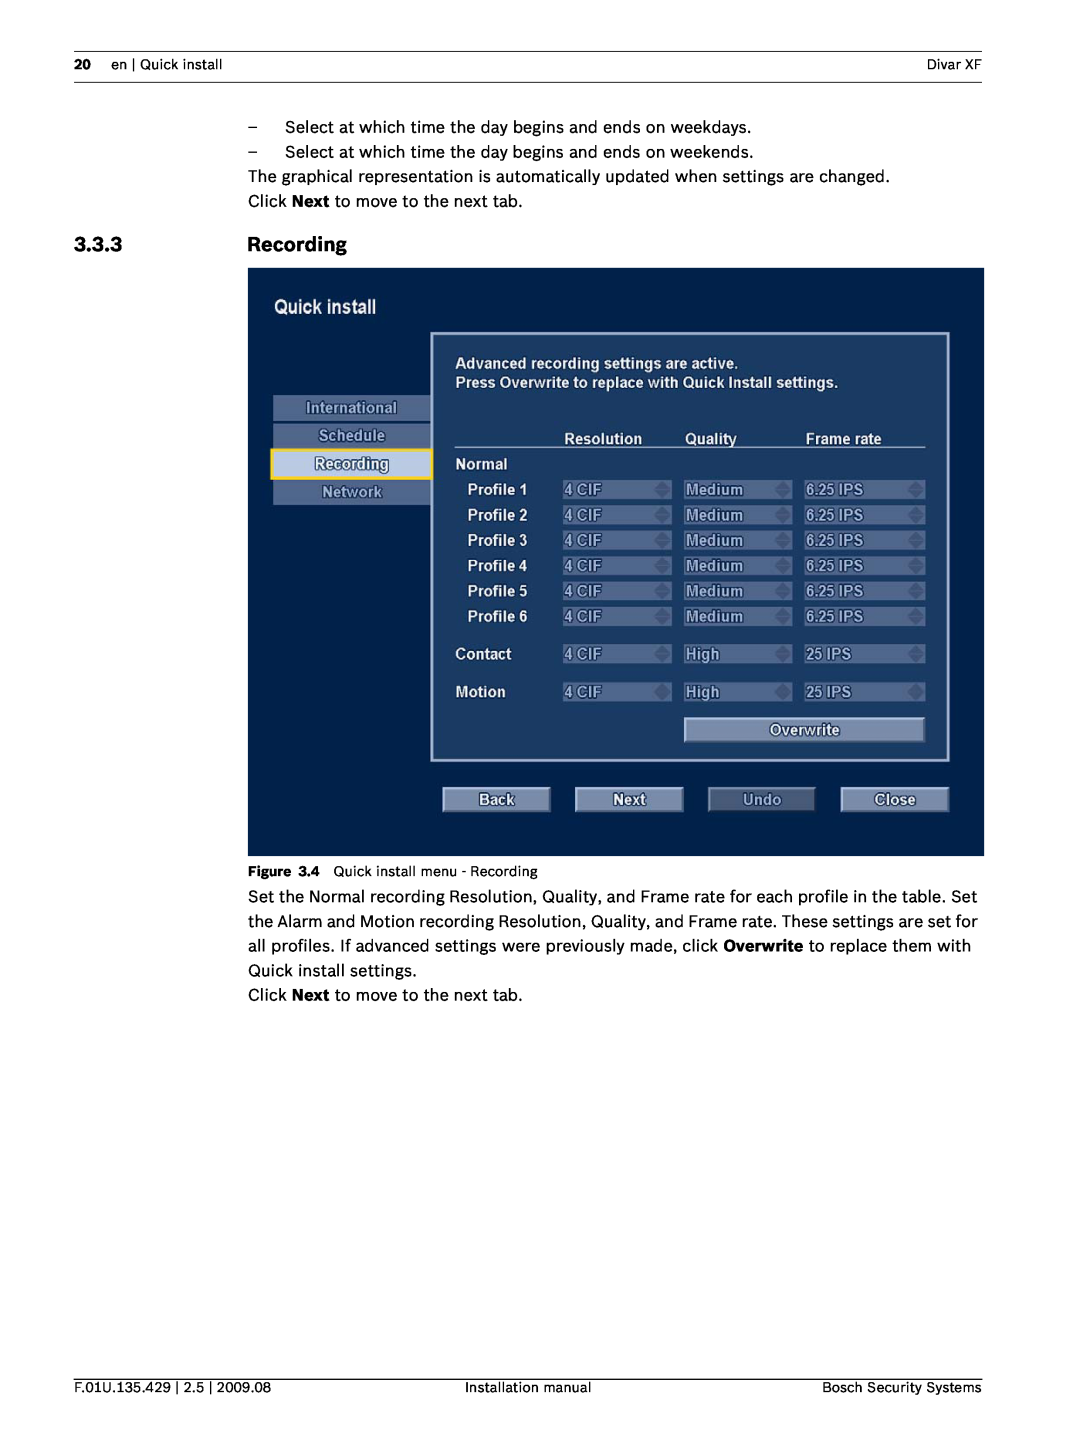 Bosch Appliances XF installation manual 3.3.3Recording 